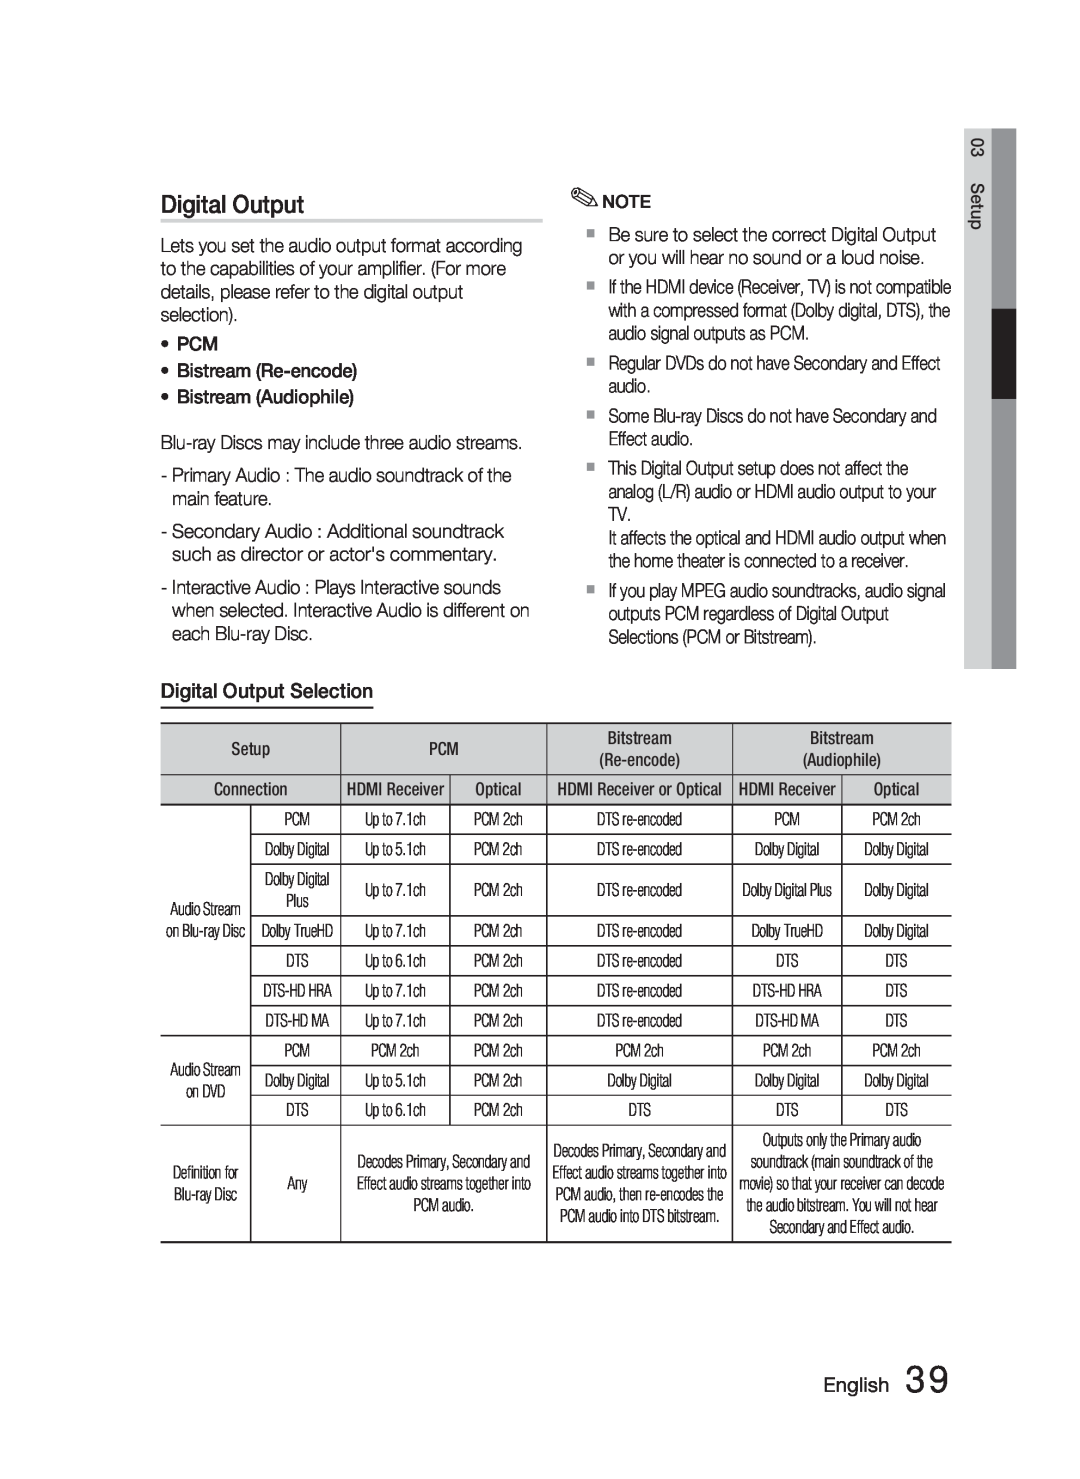 Samsung AH68-02279Y user manual Digital Output Selection, English 